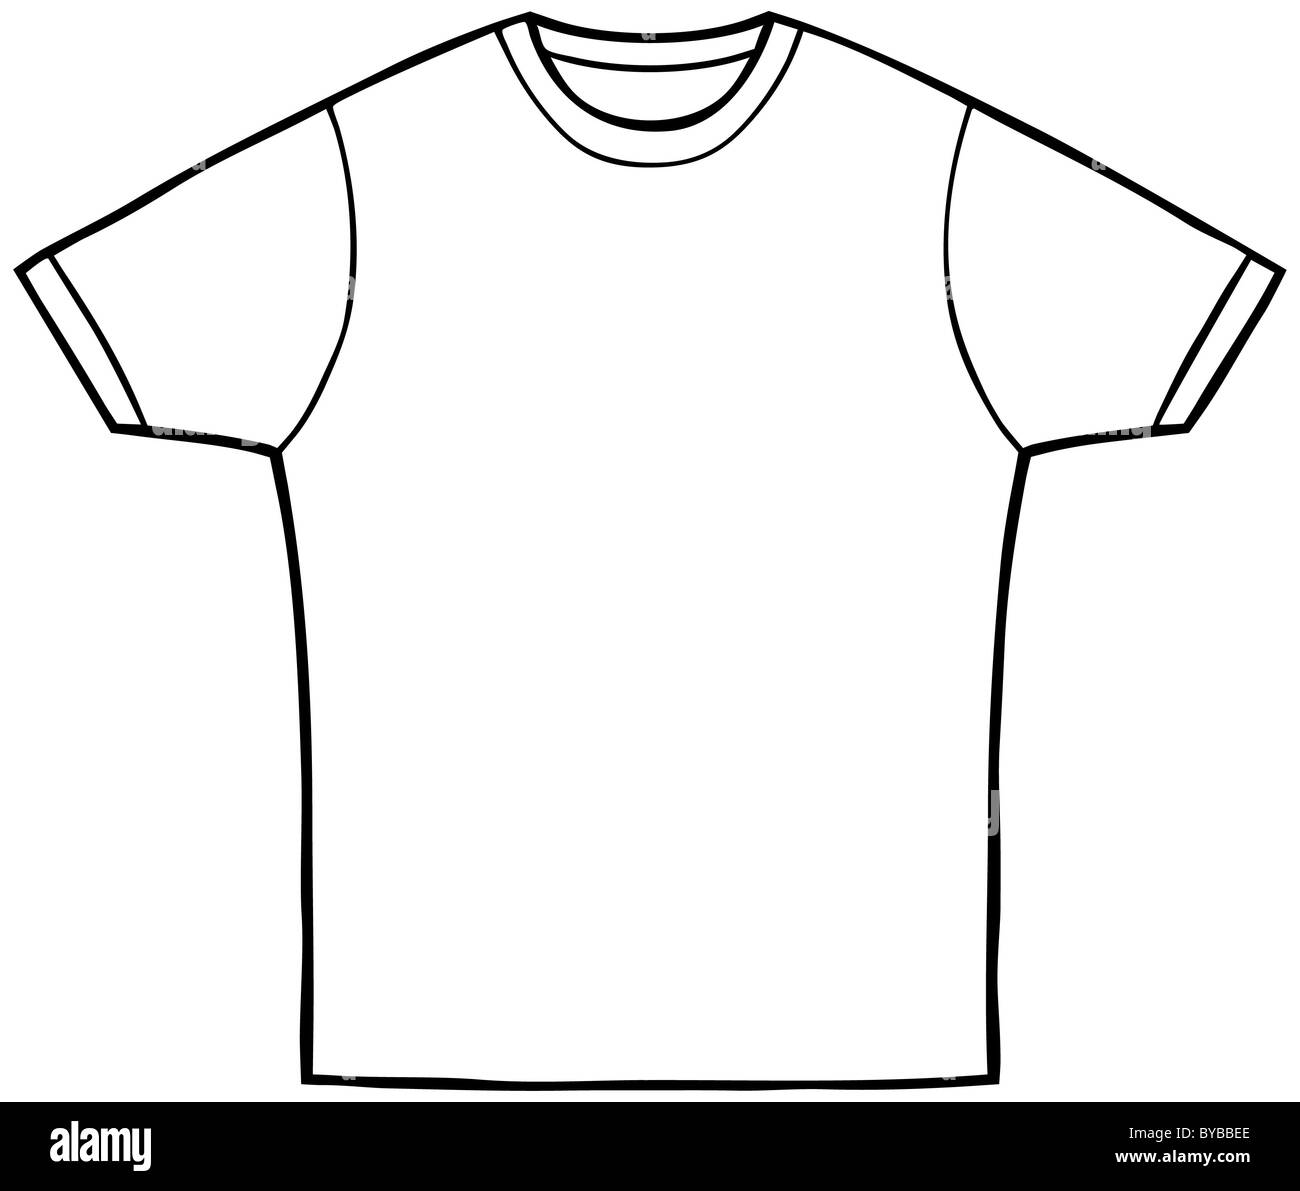 Clothing line art - t-shirt - black and white Stock Photo - Alamy